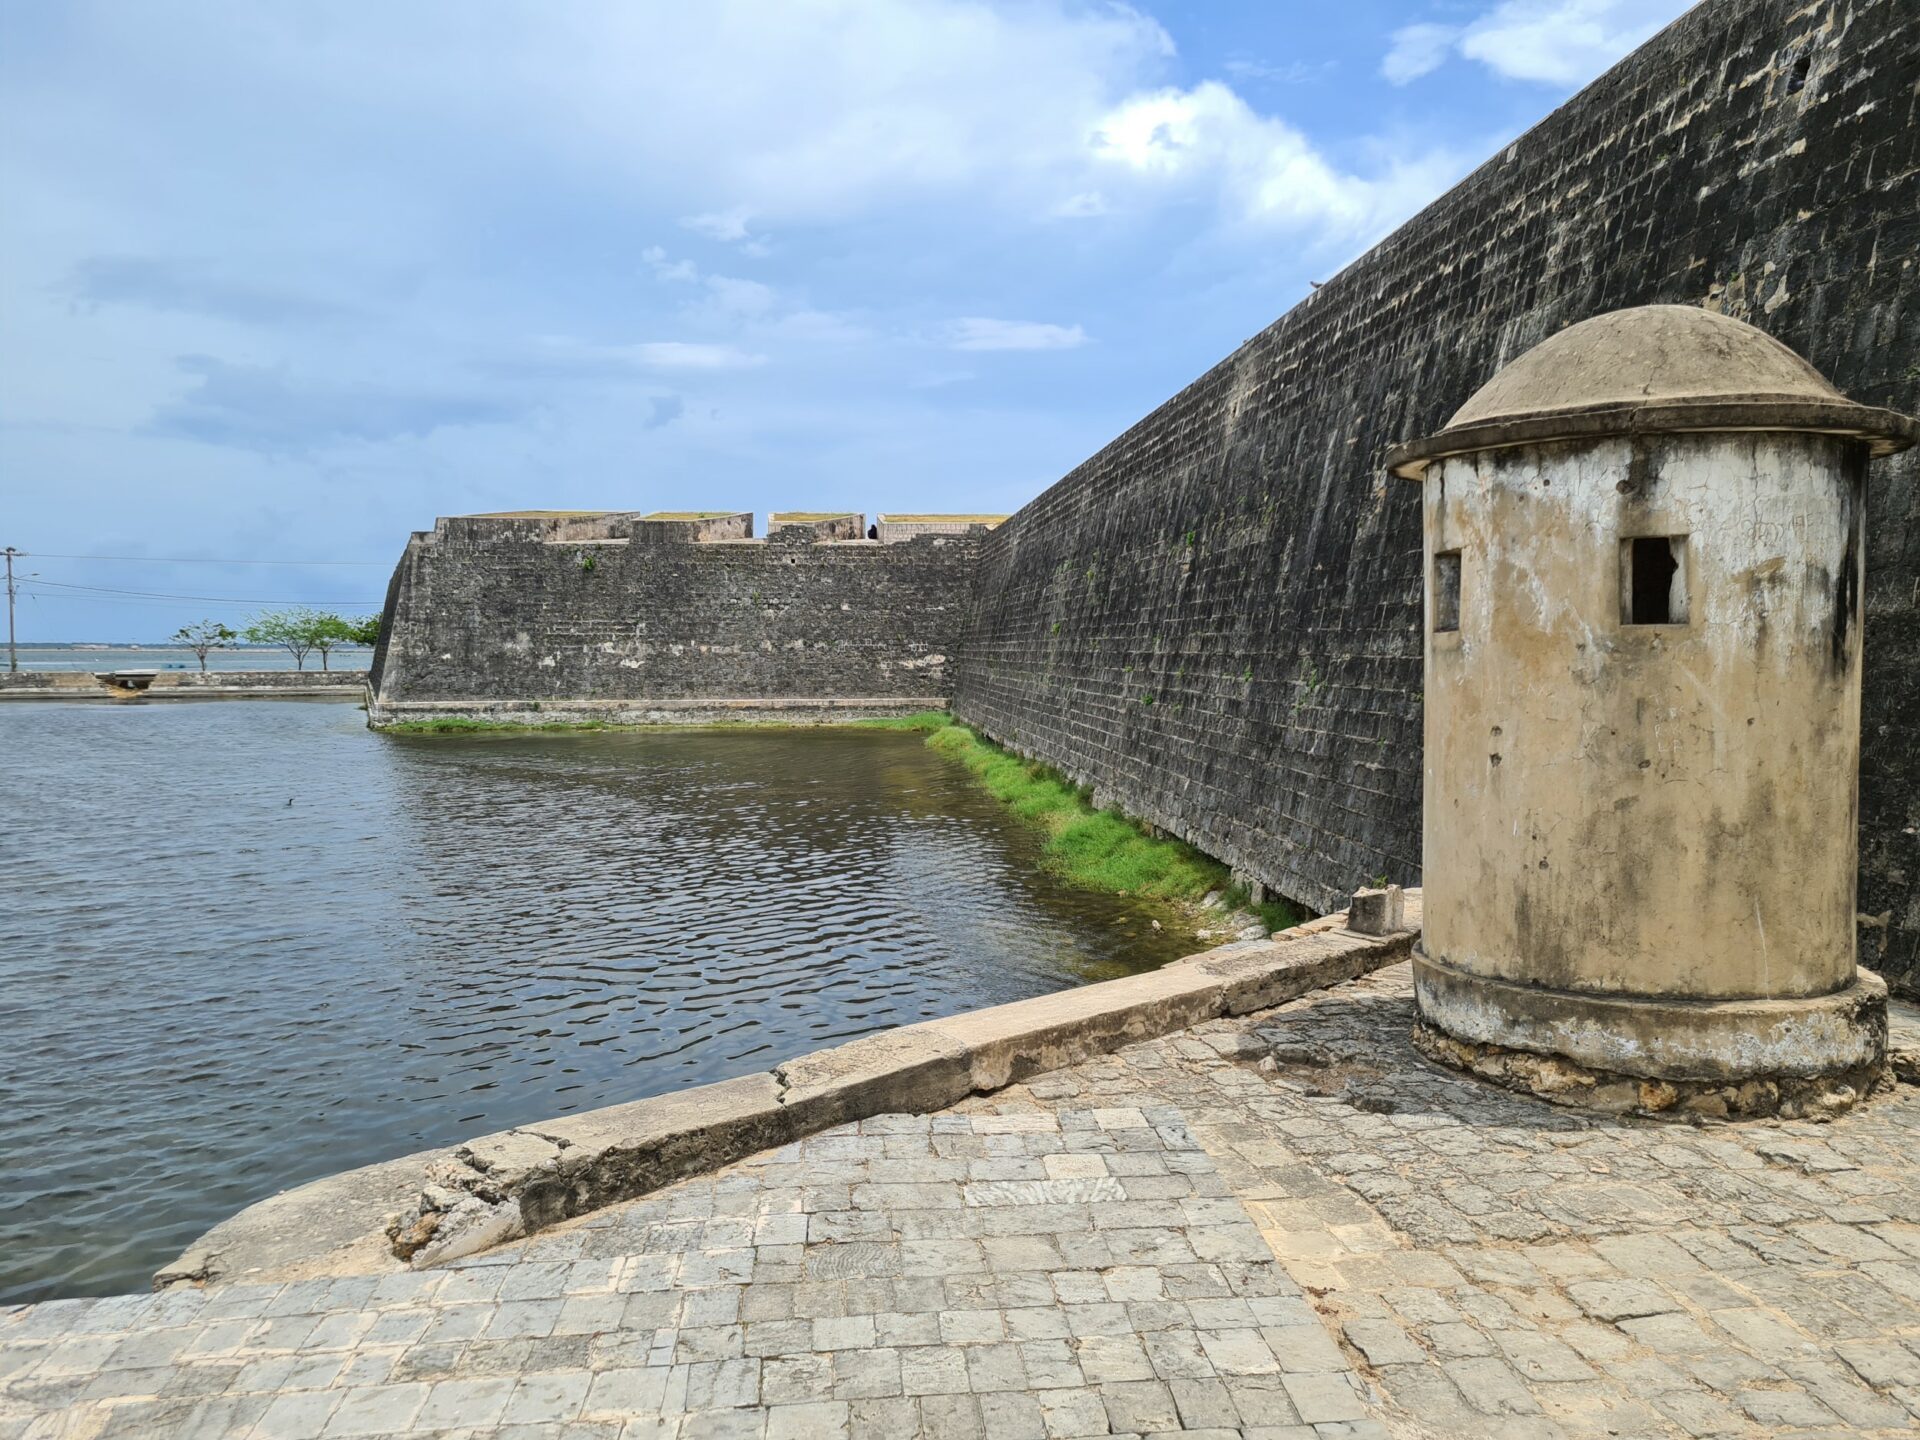 Home Sri Lanka Istock rondreis vakantie original Asia jaffna fort